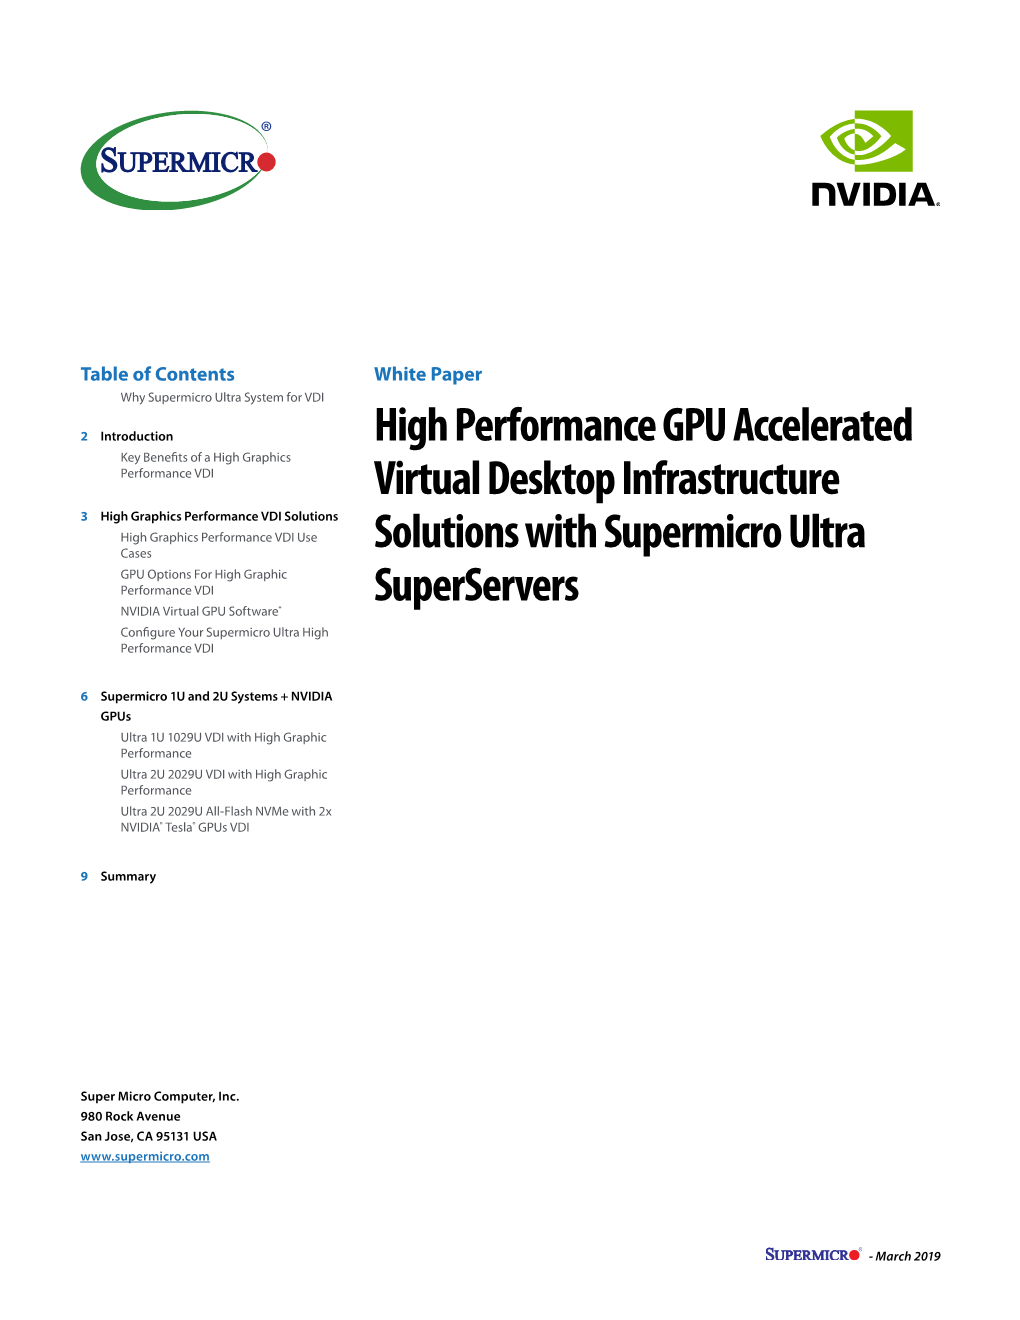 High Performance GPU Accelerated Virtual Desktop Infrastructure